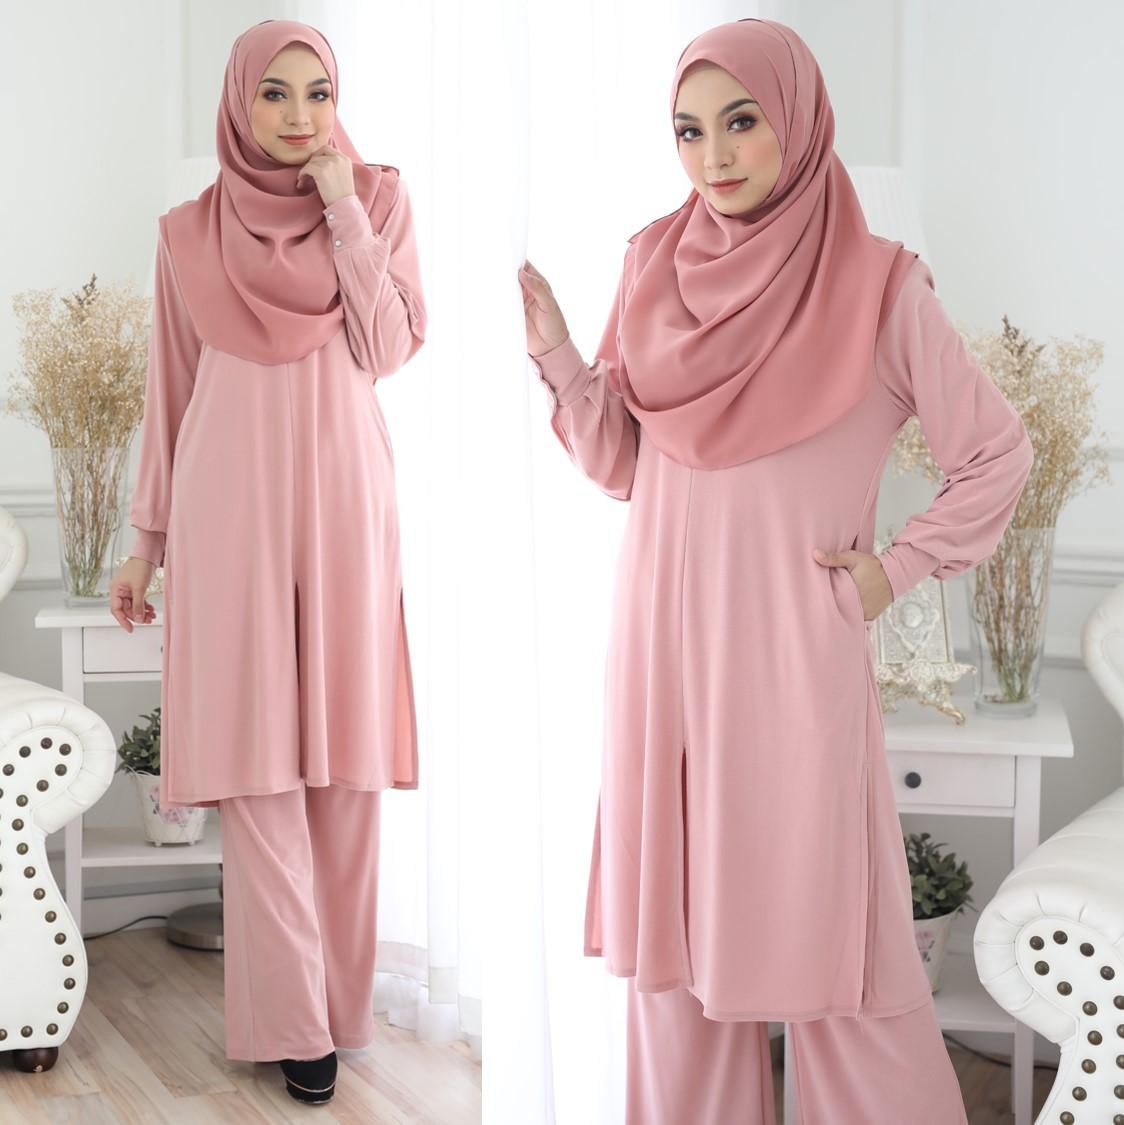 Estifa Zara Modest Clothing Suit - 8 Sizes (Rosy Pink)